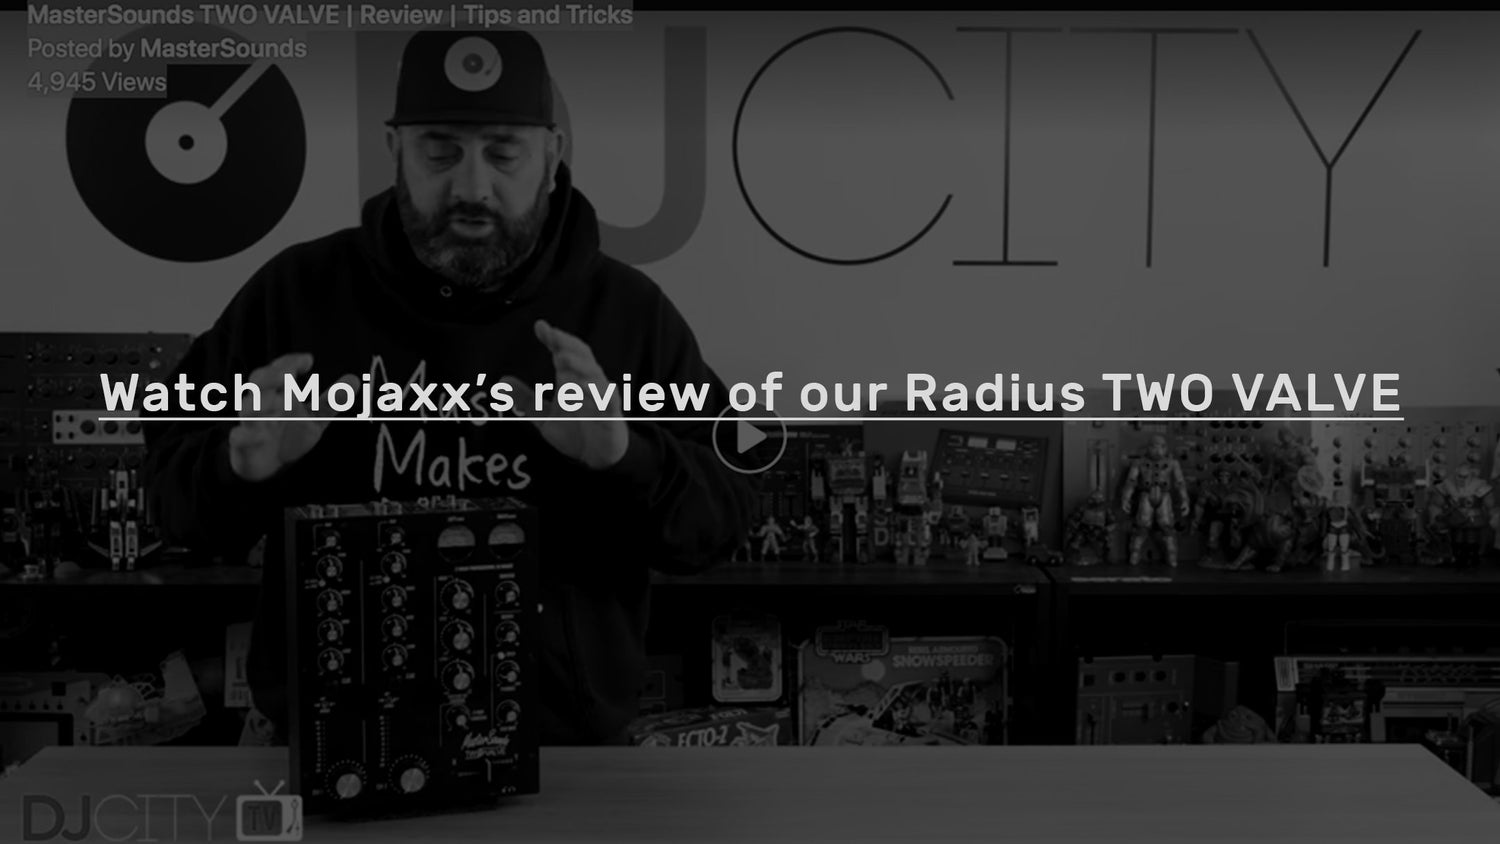 Mojaxx at DJ City UK reviews the Radius TWO VALVE - MasterSounds